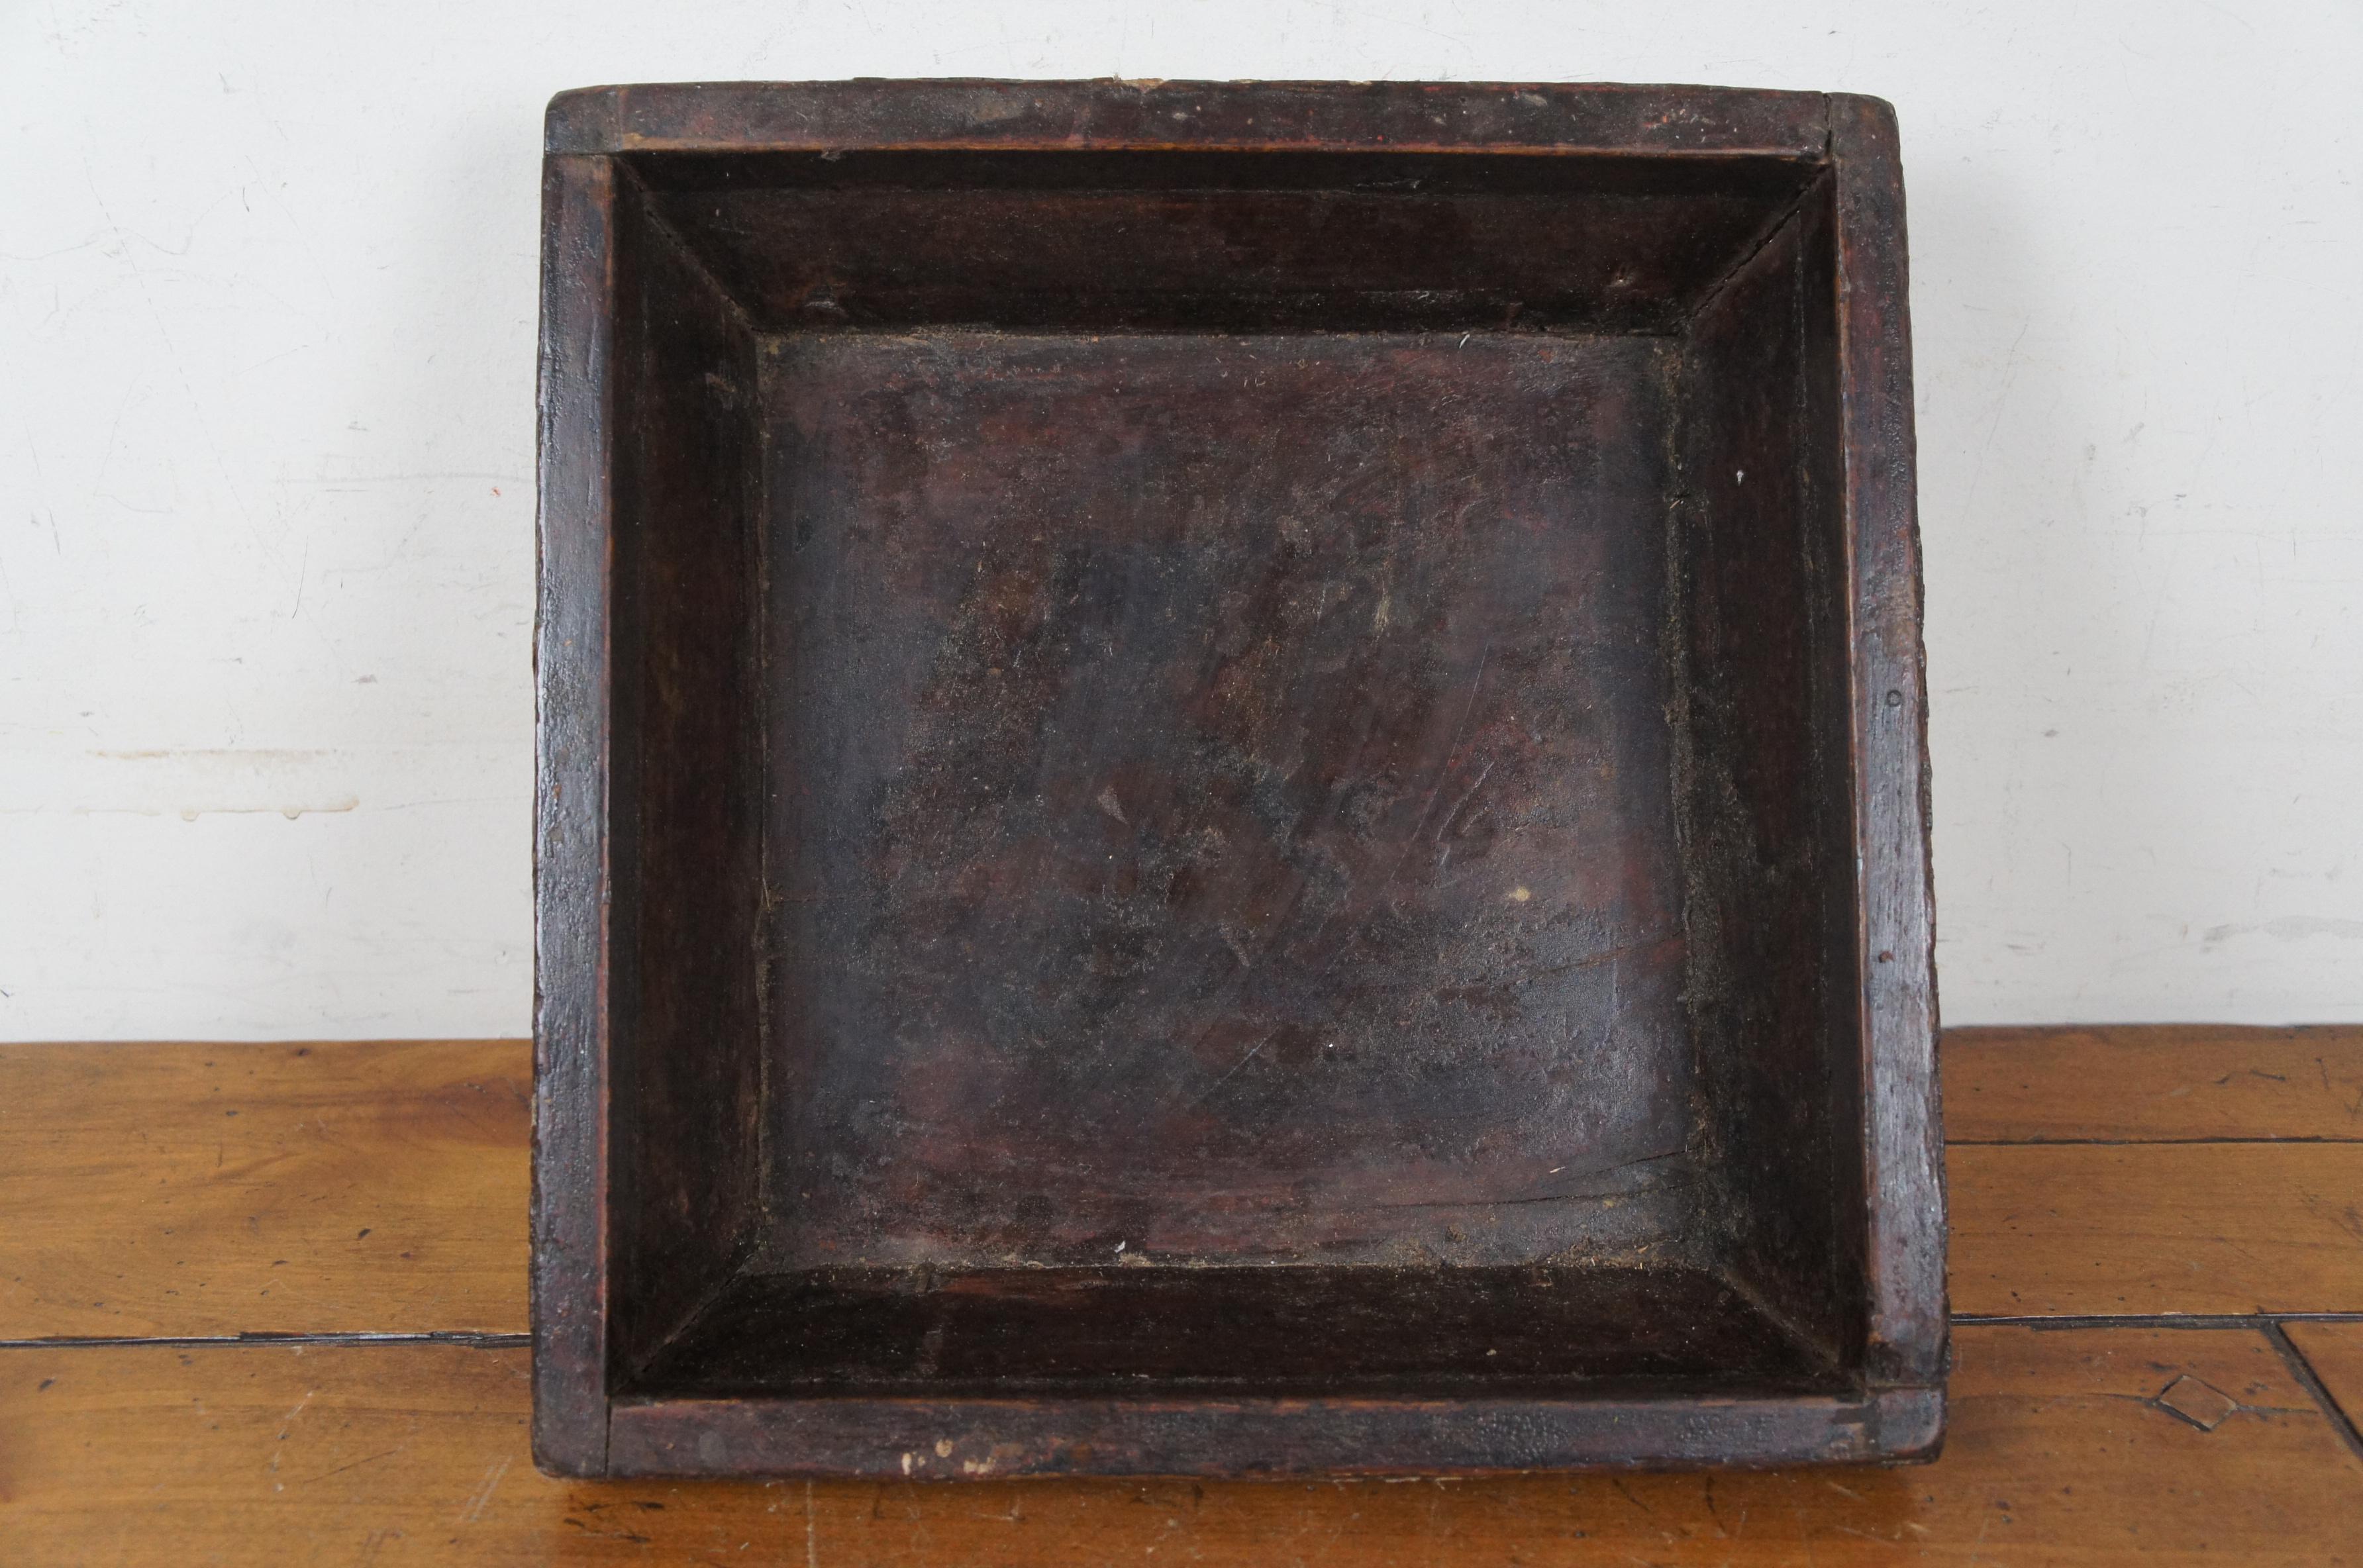 Hardwood Antique Japanese Lacquered Square Wood Bowl Tray Bonsai Pot Planter 14